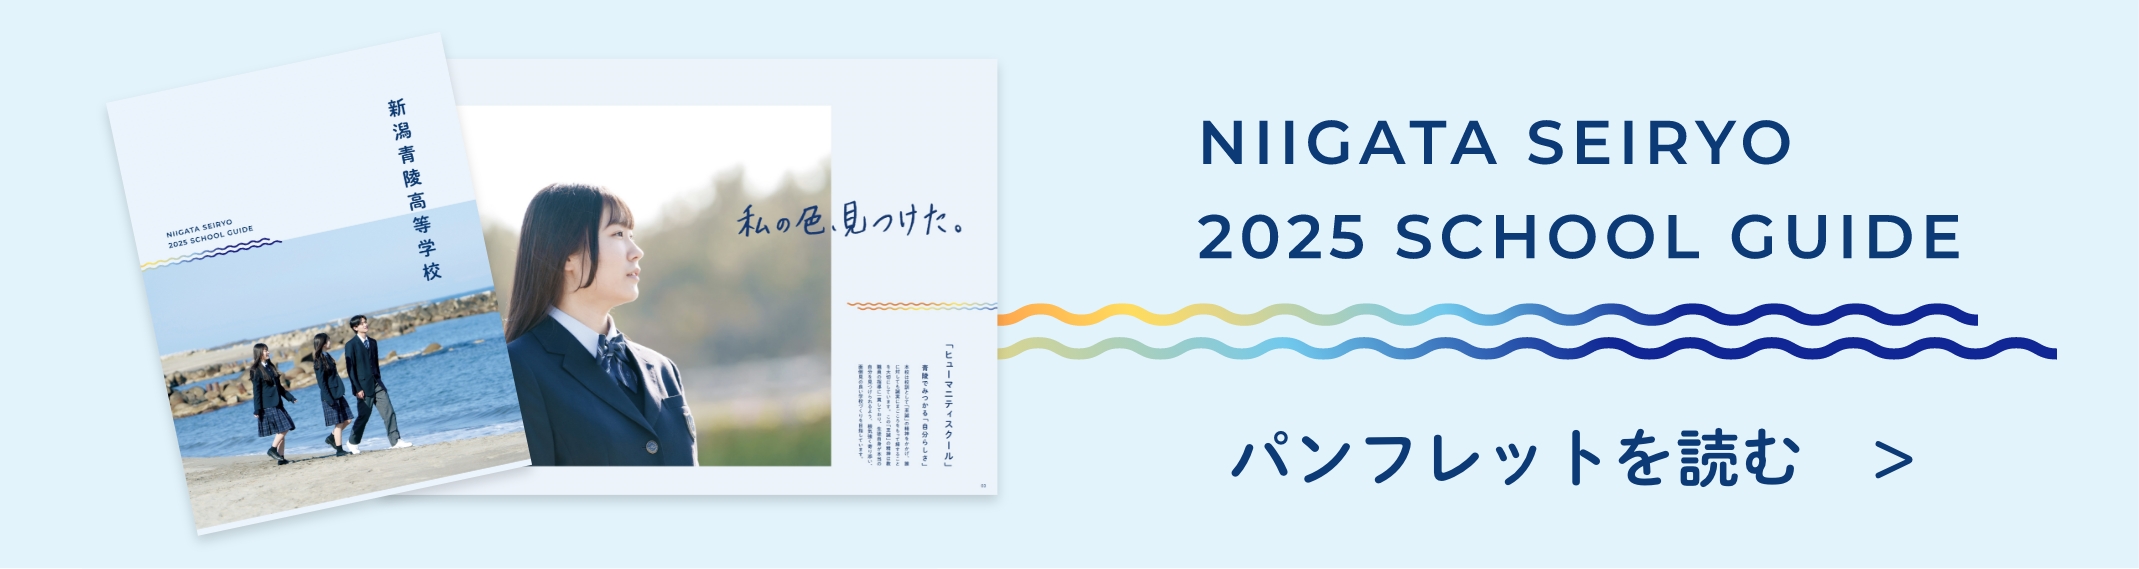 NIIGATA SEIRYO 2025 SCHOOL GUIDE